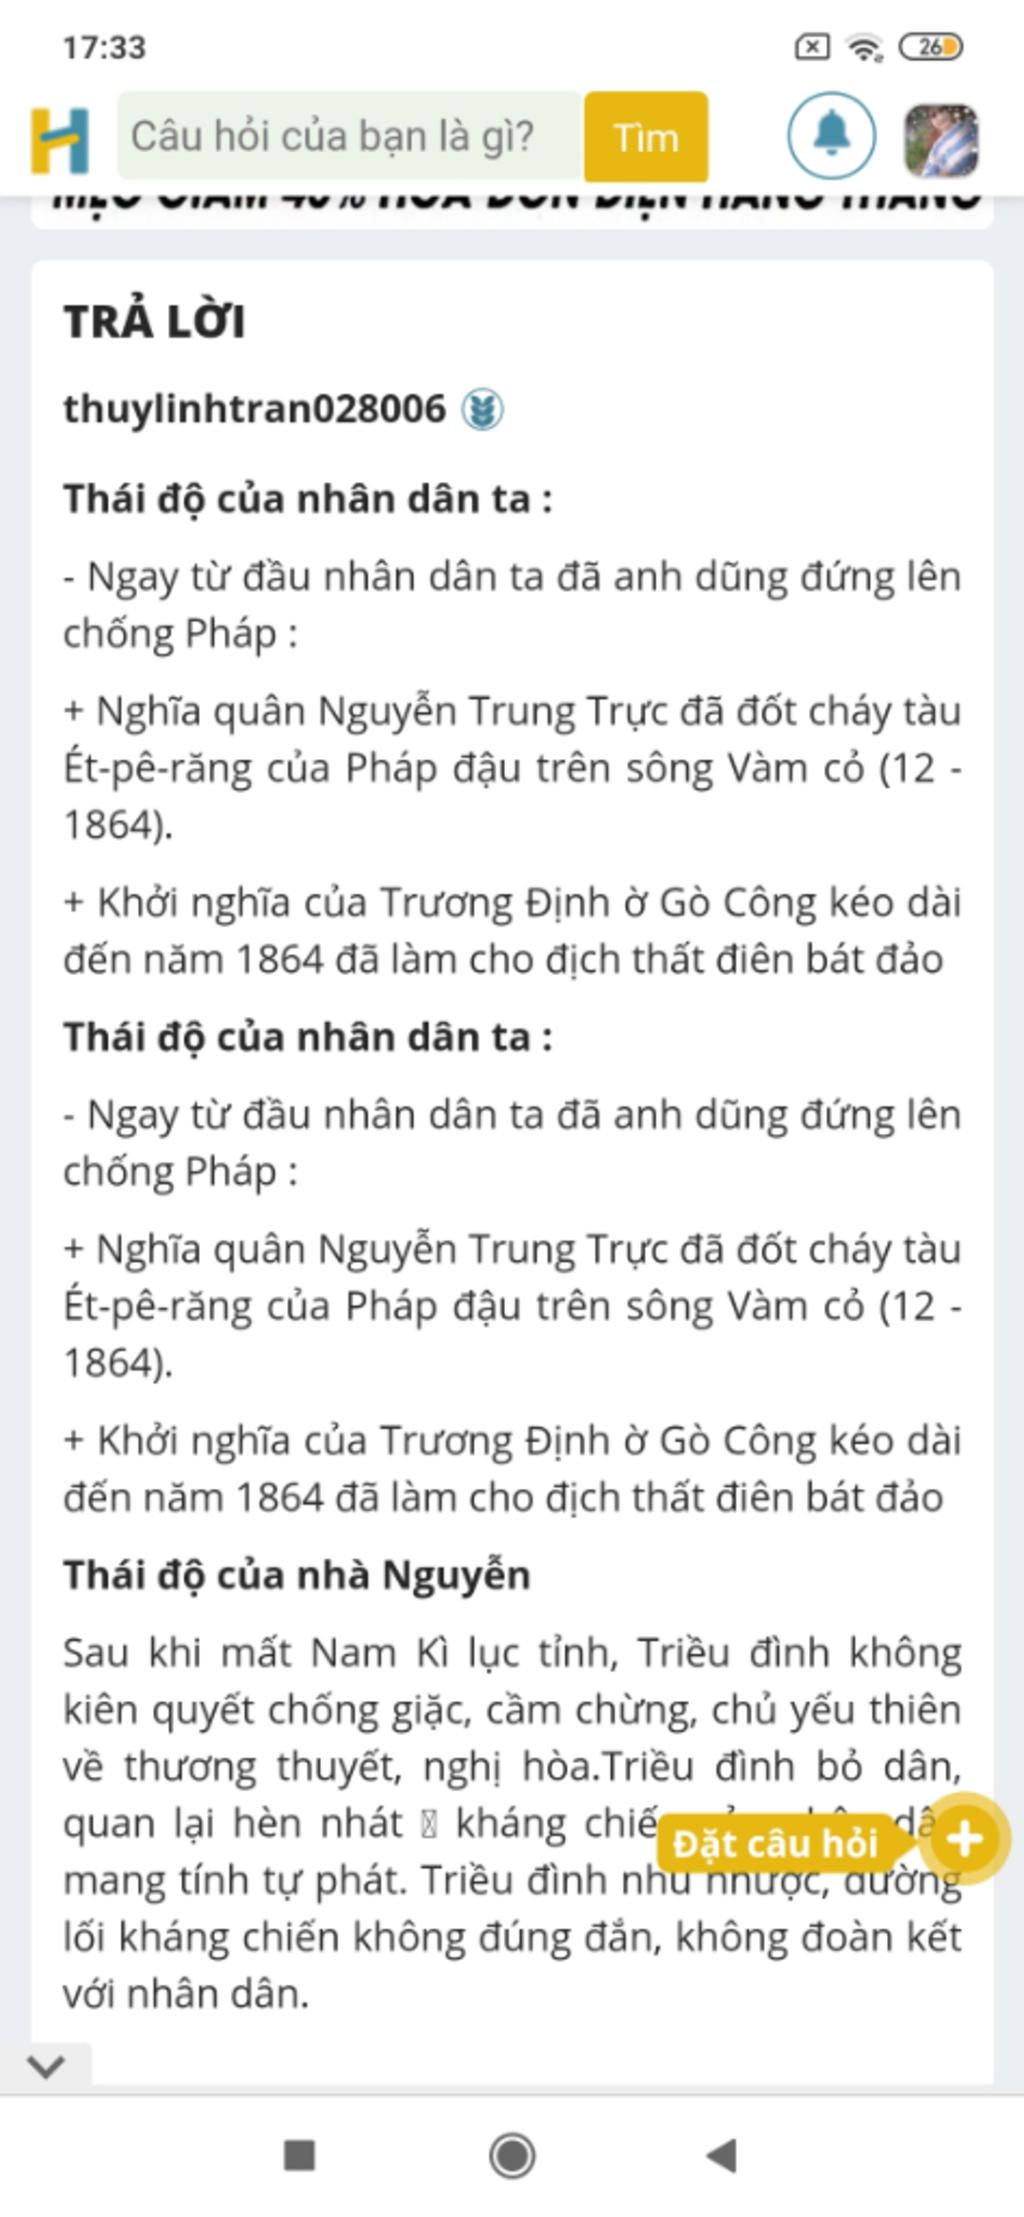 phan-tich-thai-do-cua-trieu-dinh-nha-nguyen-va-nhan-dan-tu-nam-1858-1884